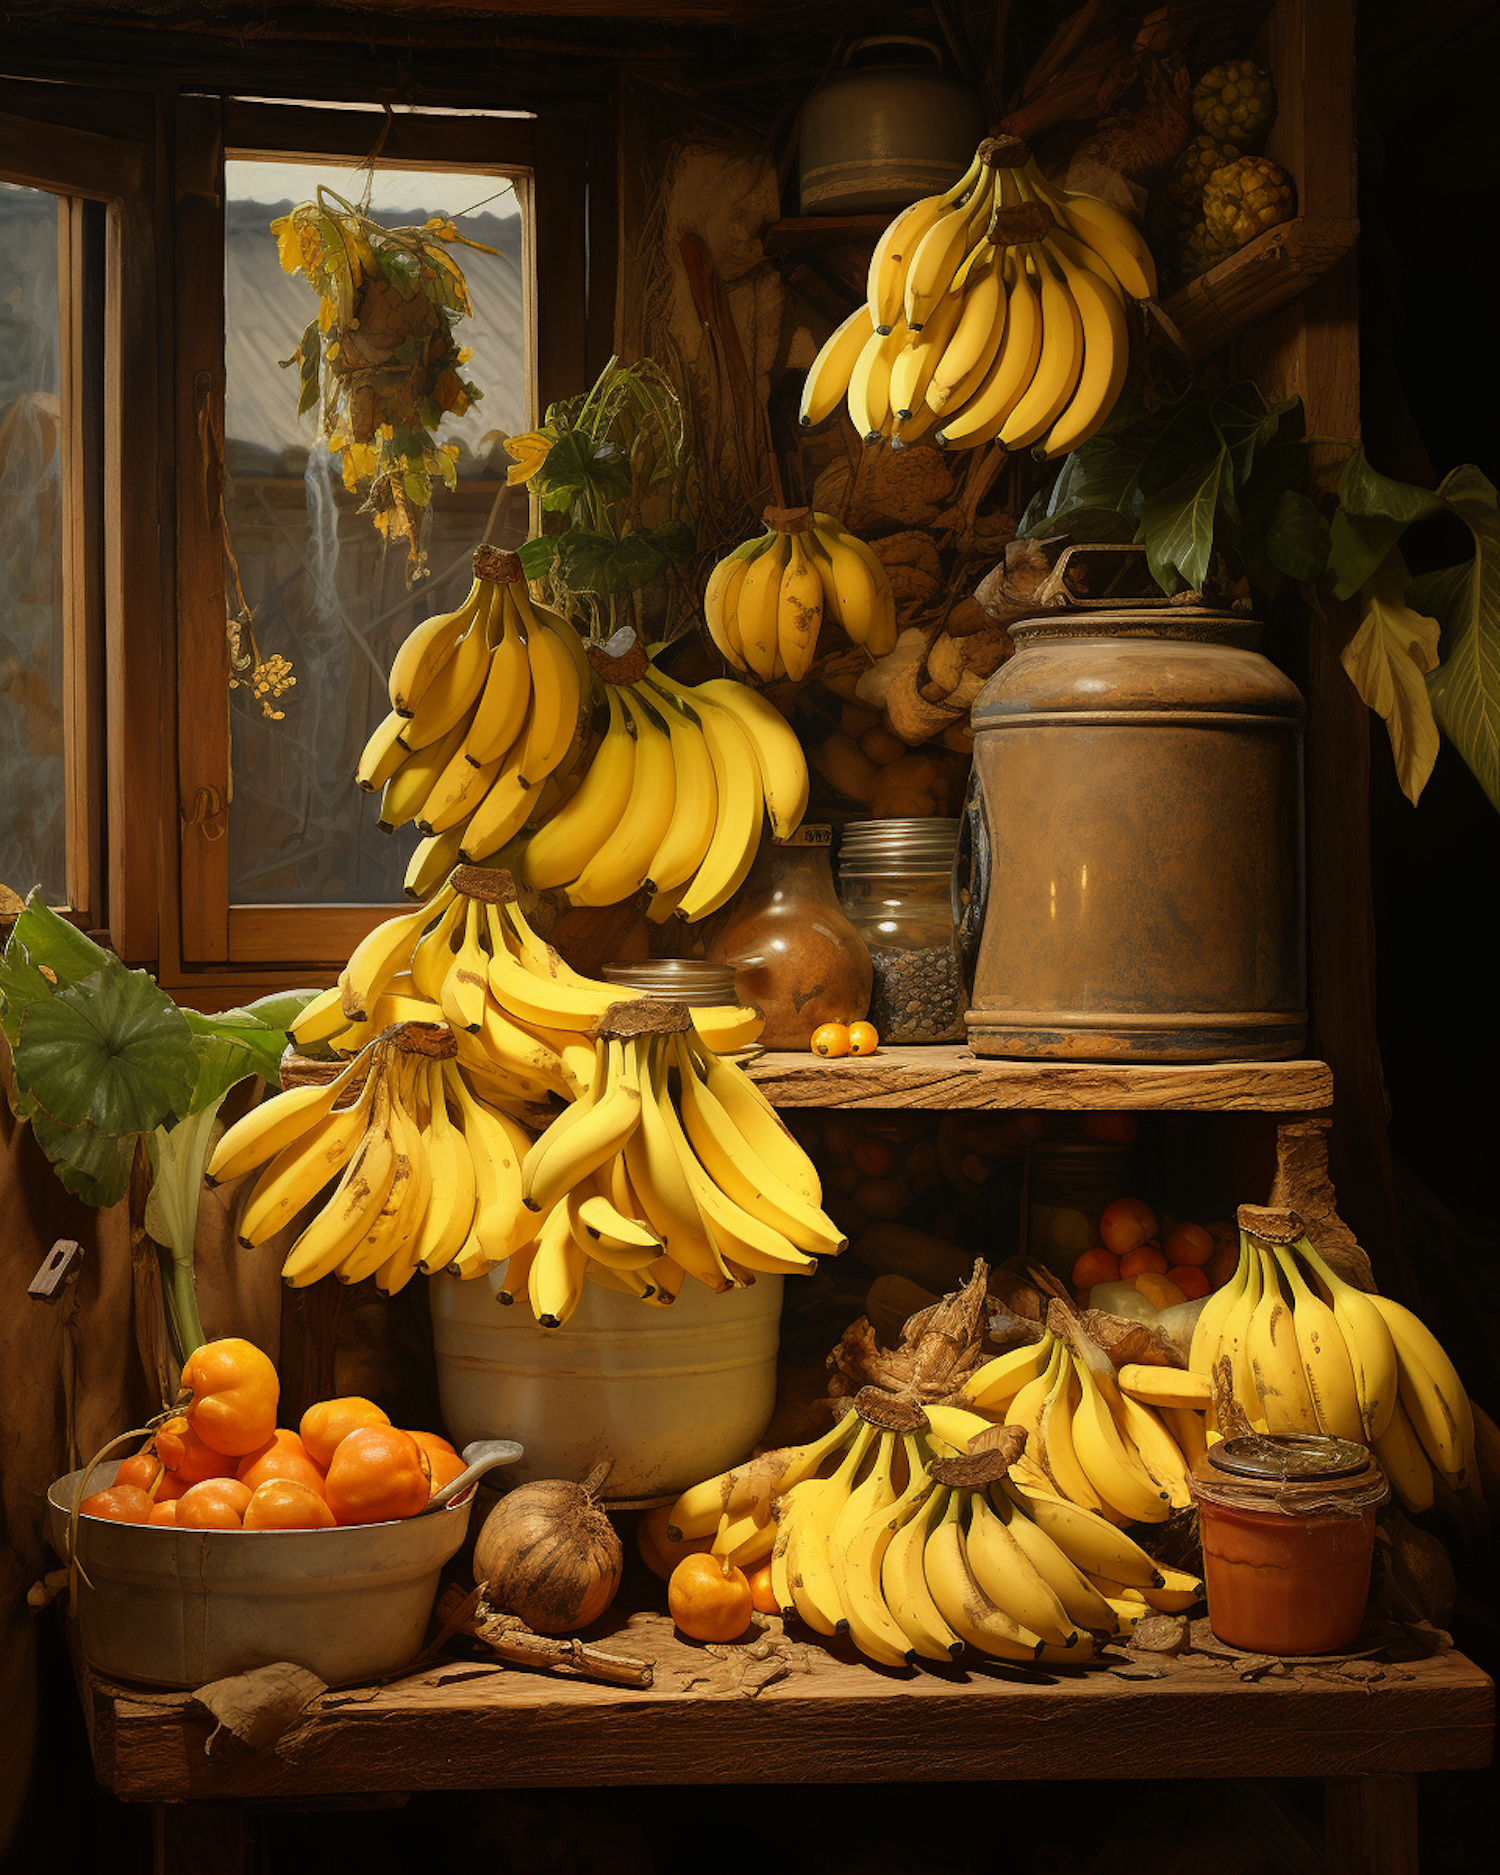 Rustic Harvest - Bananas and Warm Hues